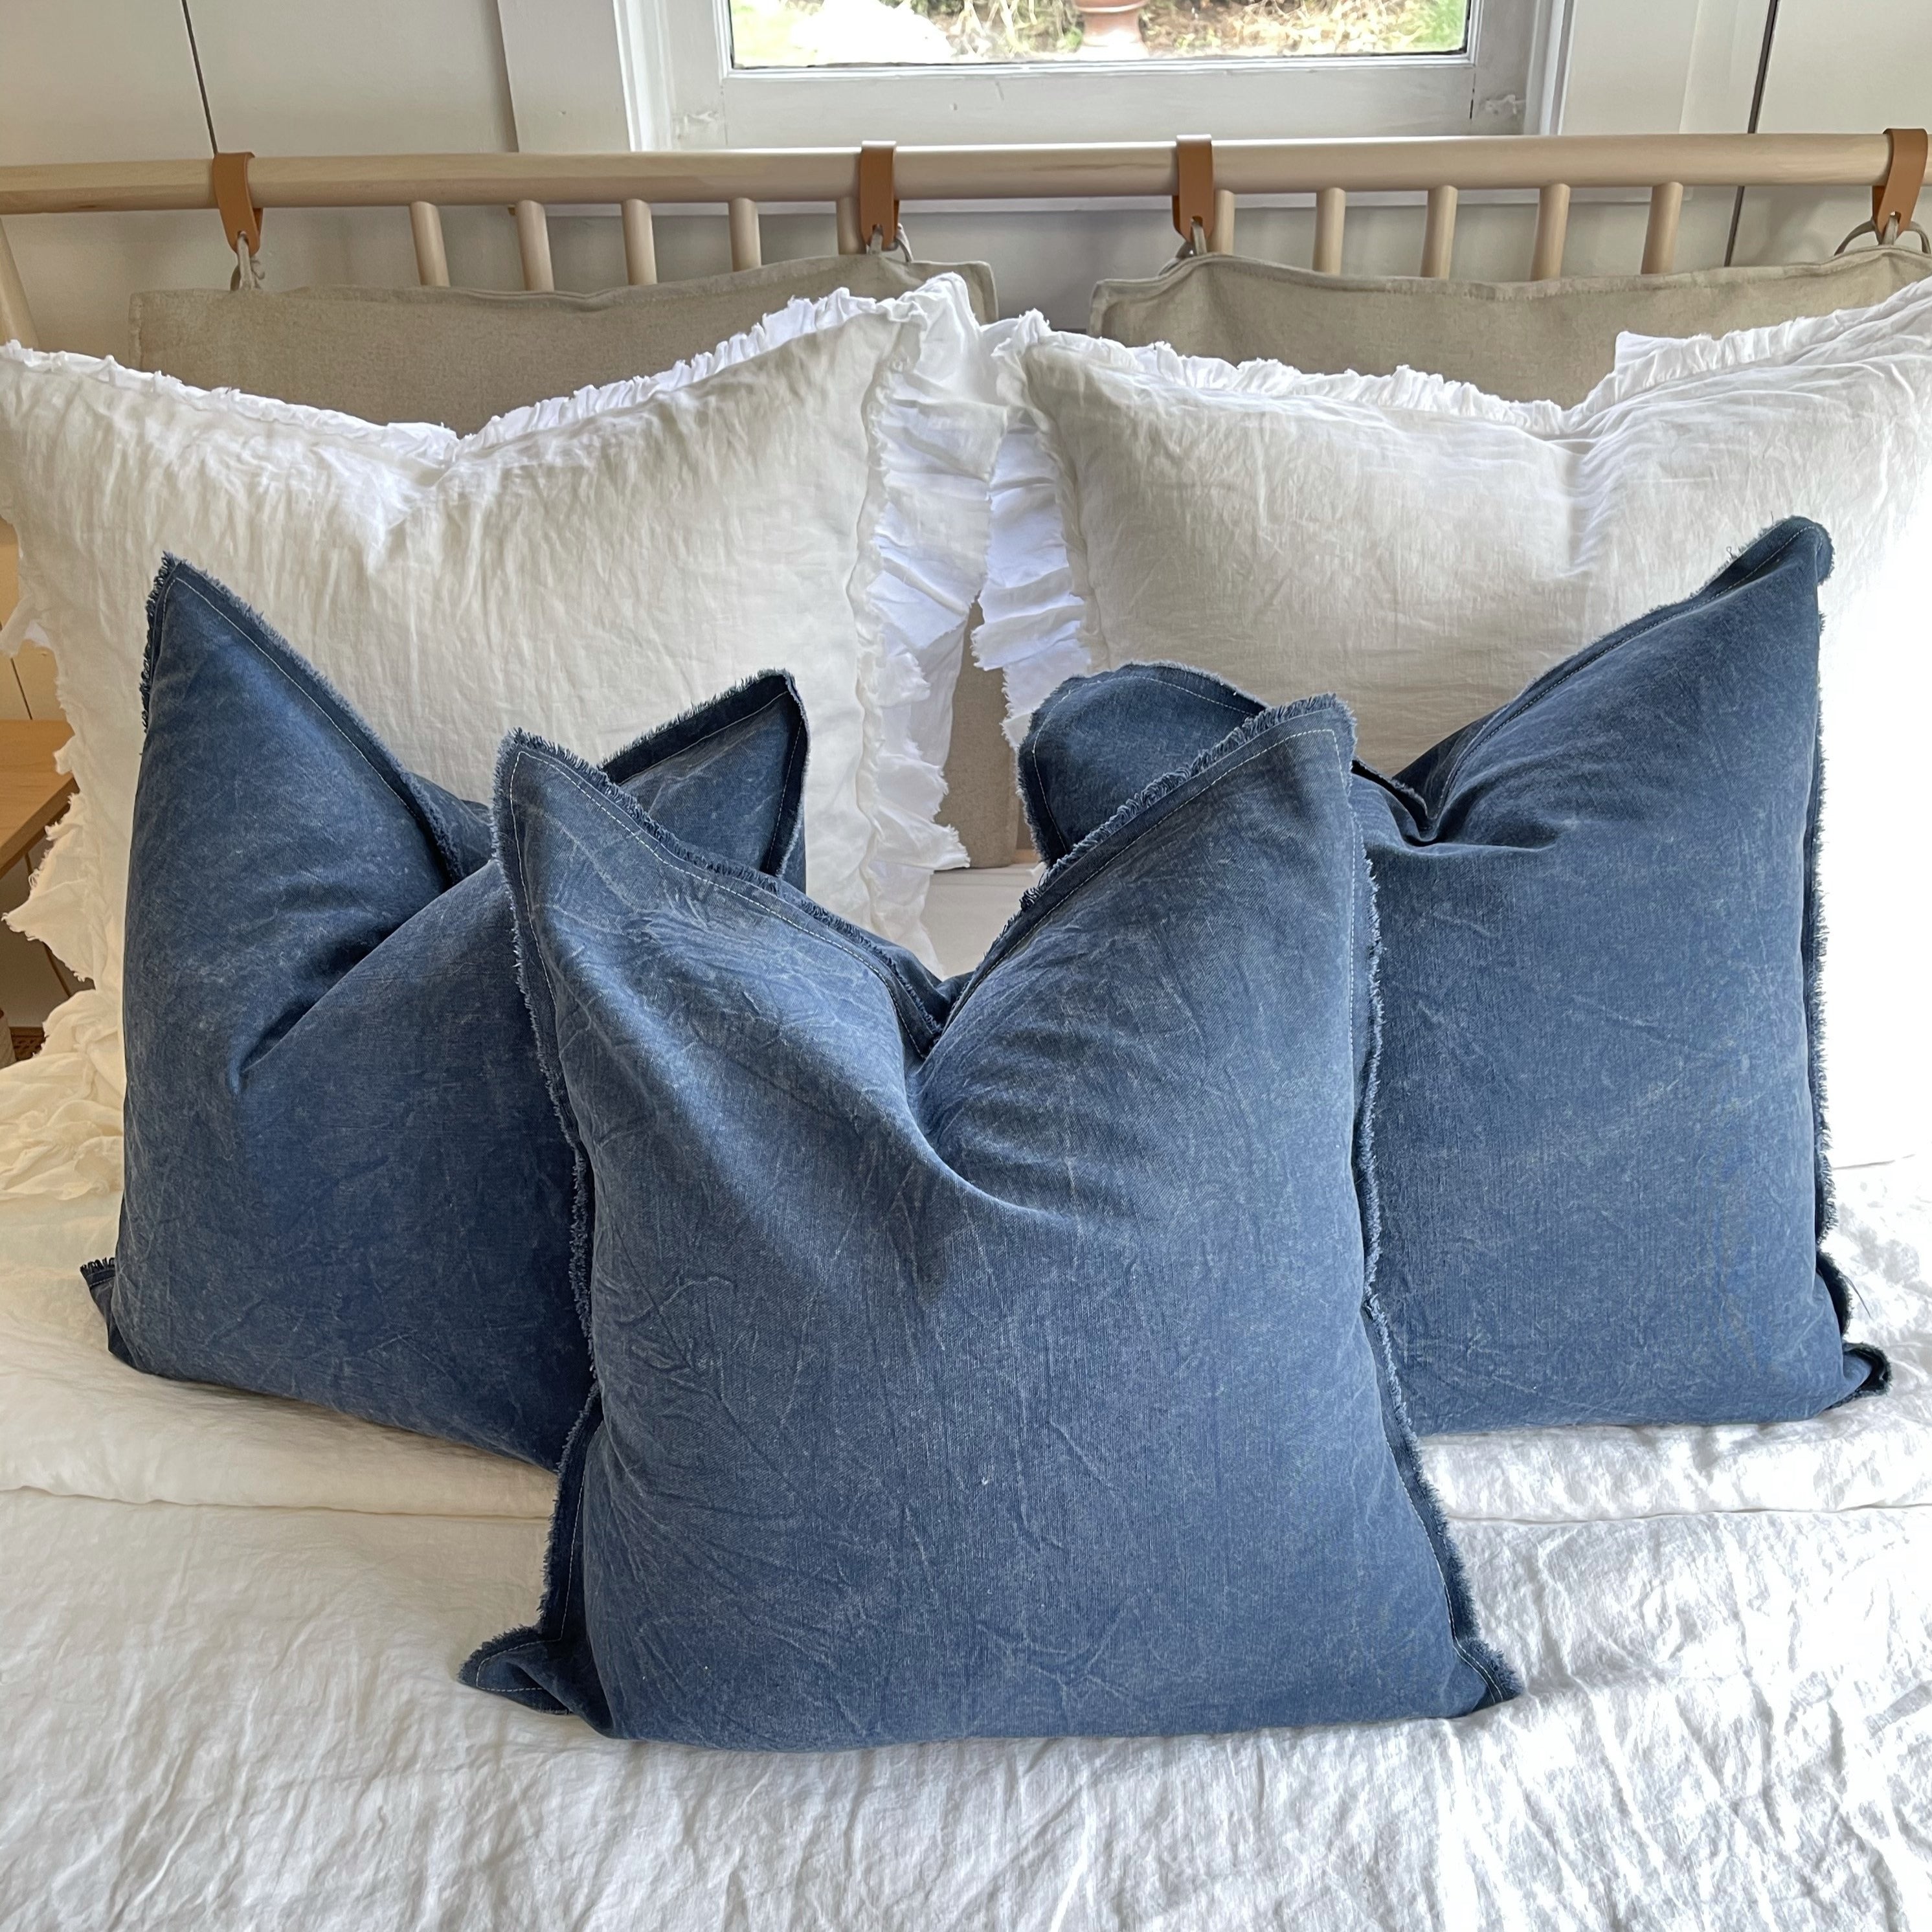 Raw Edge Navy Blue Throw Pillow Cover – Hallstrom Home